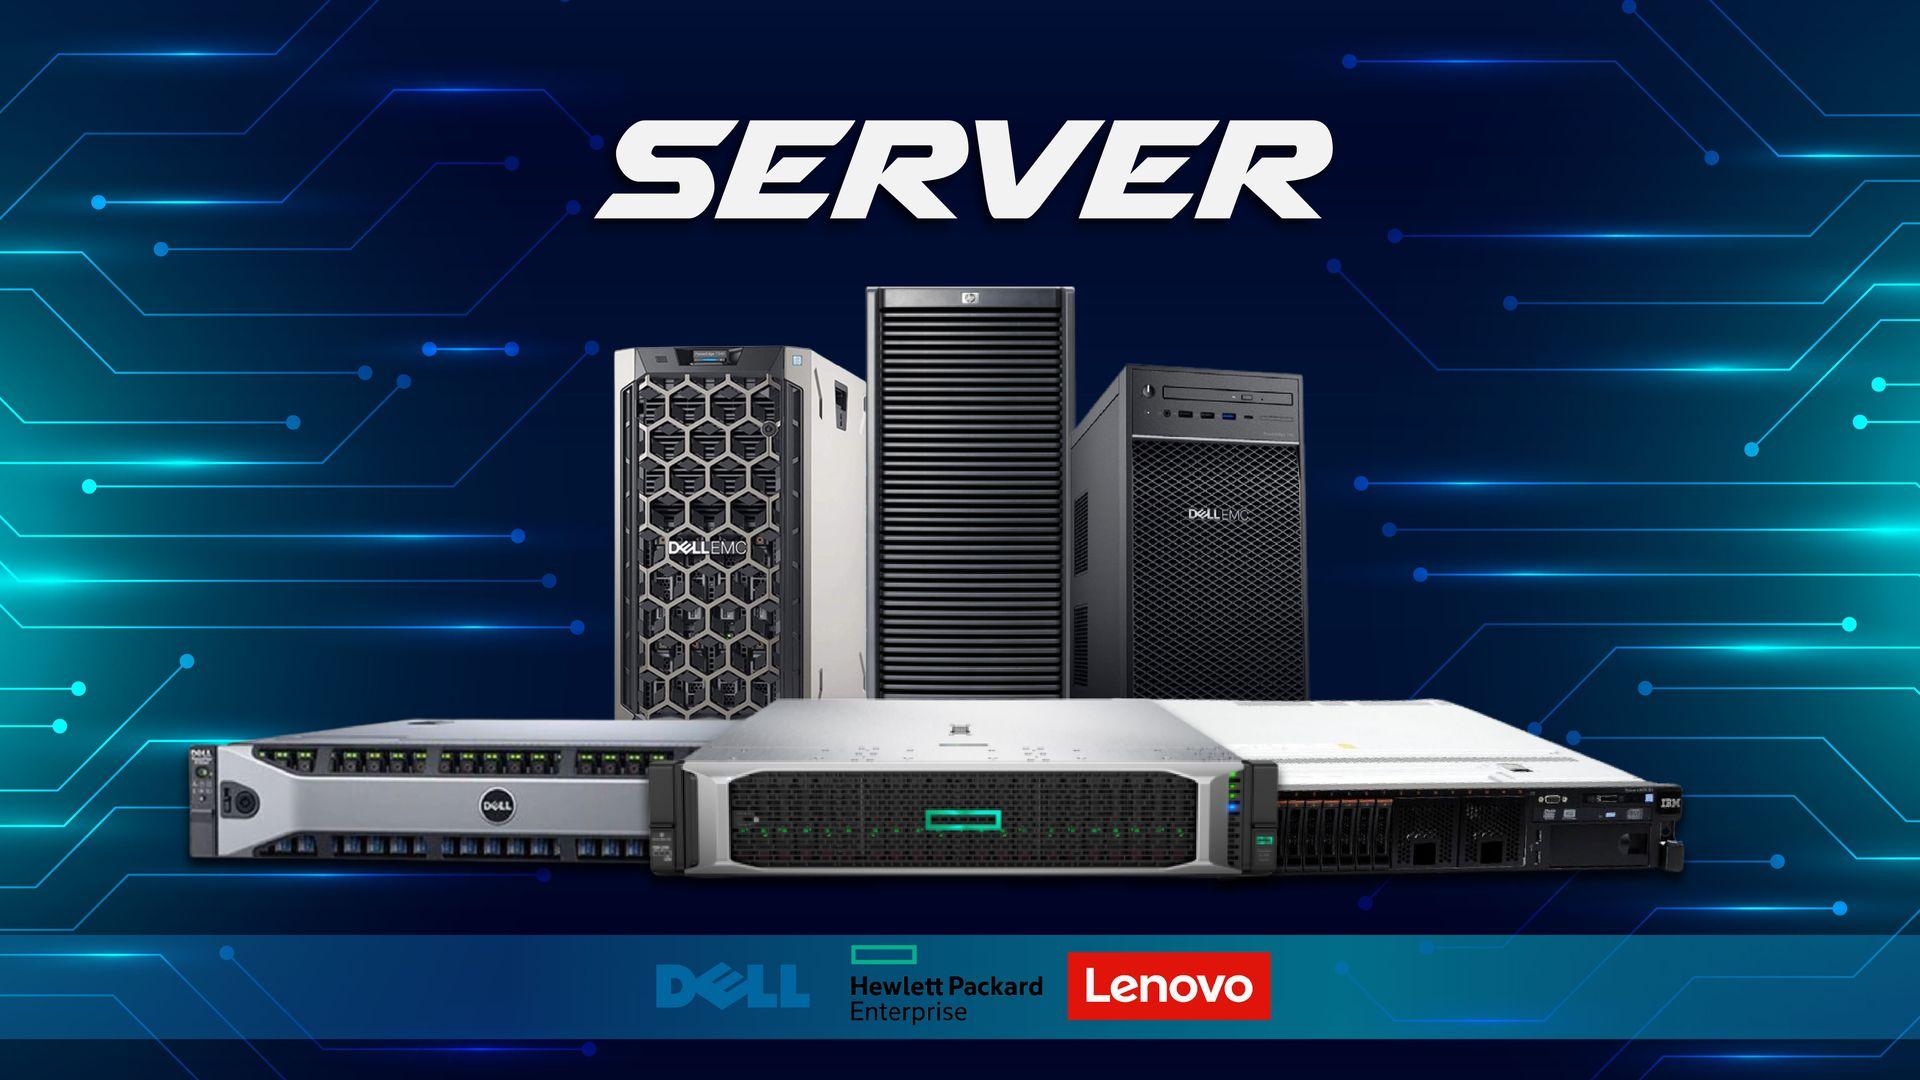 Buy Server Rack Singapore